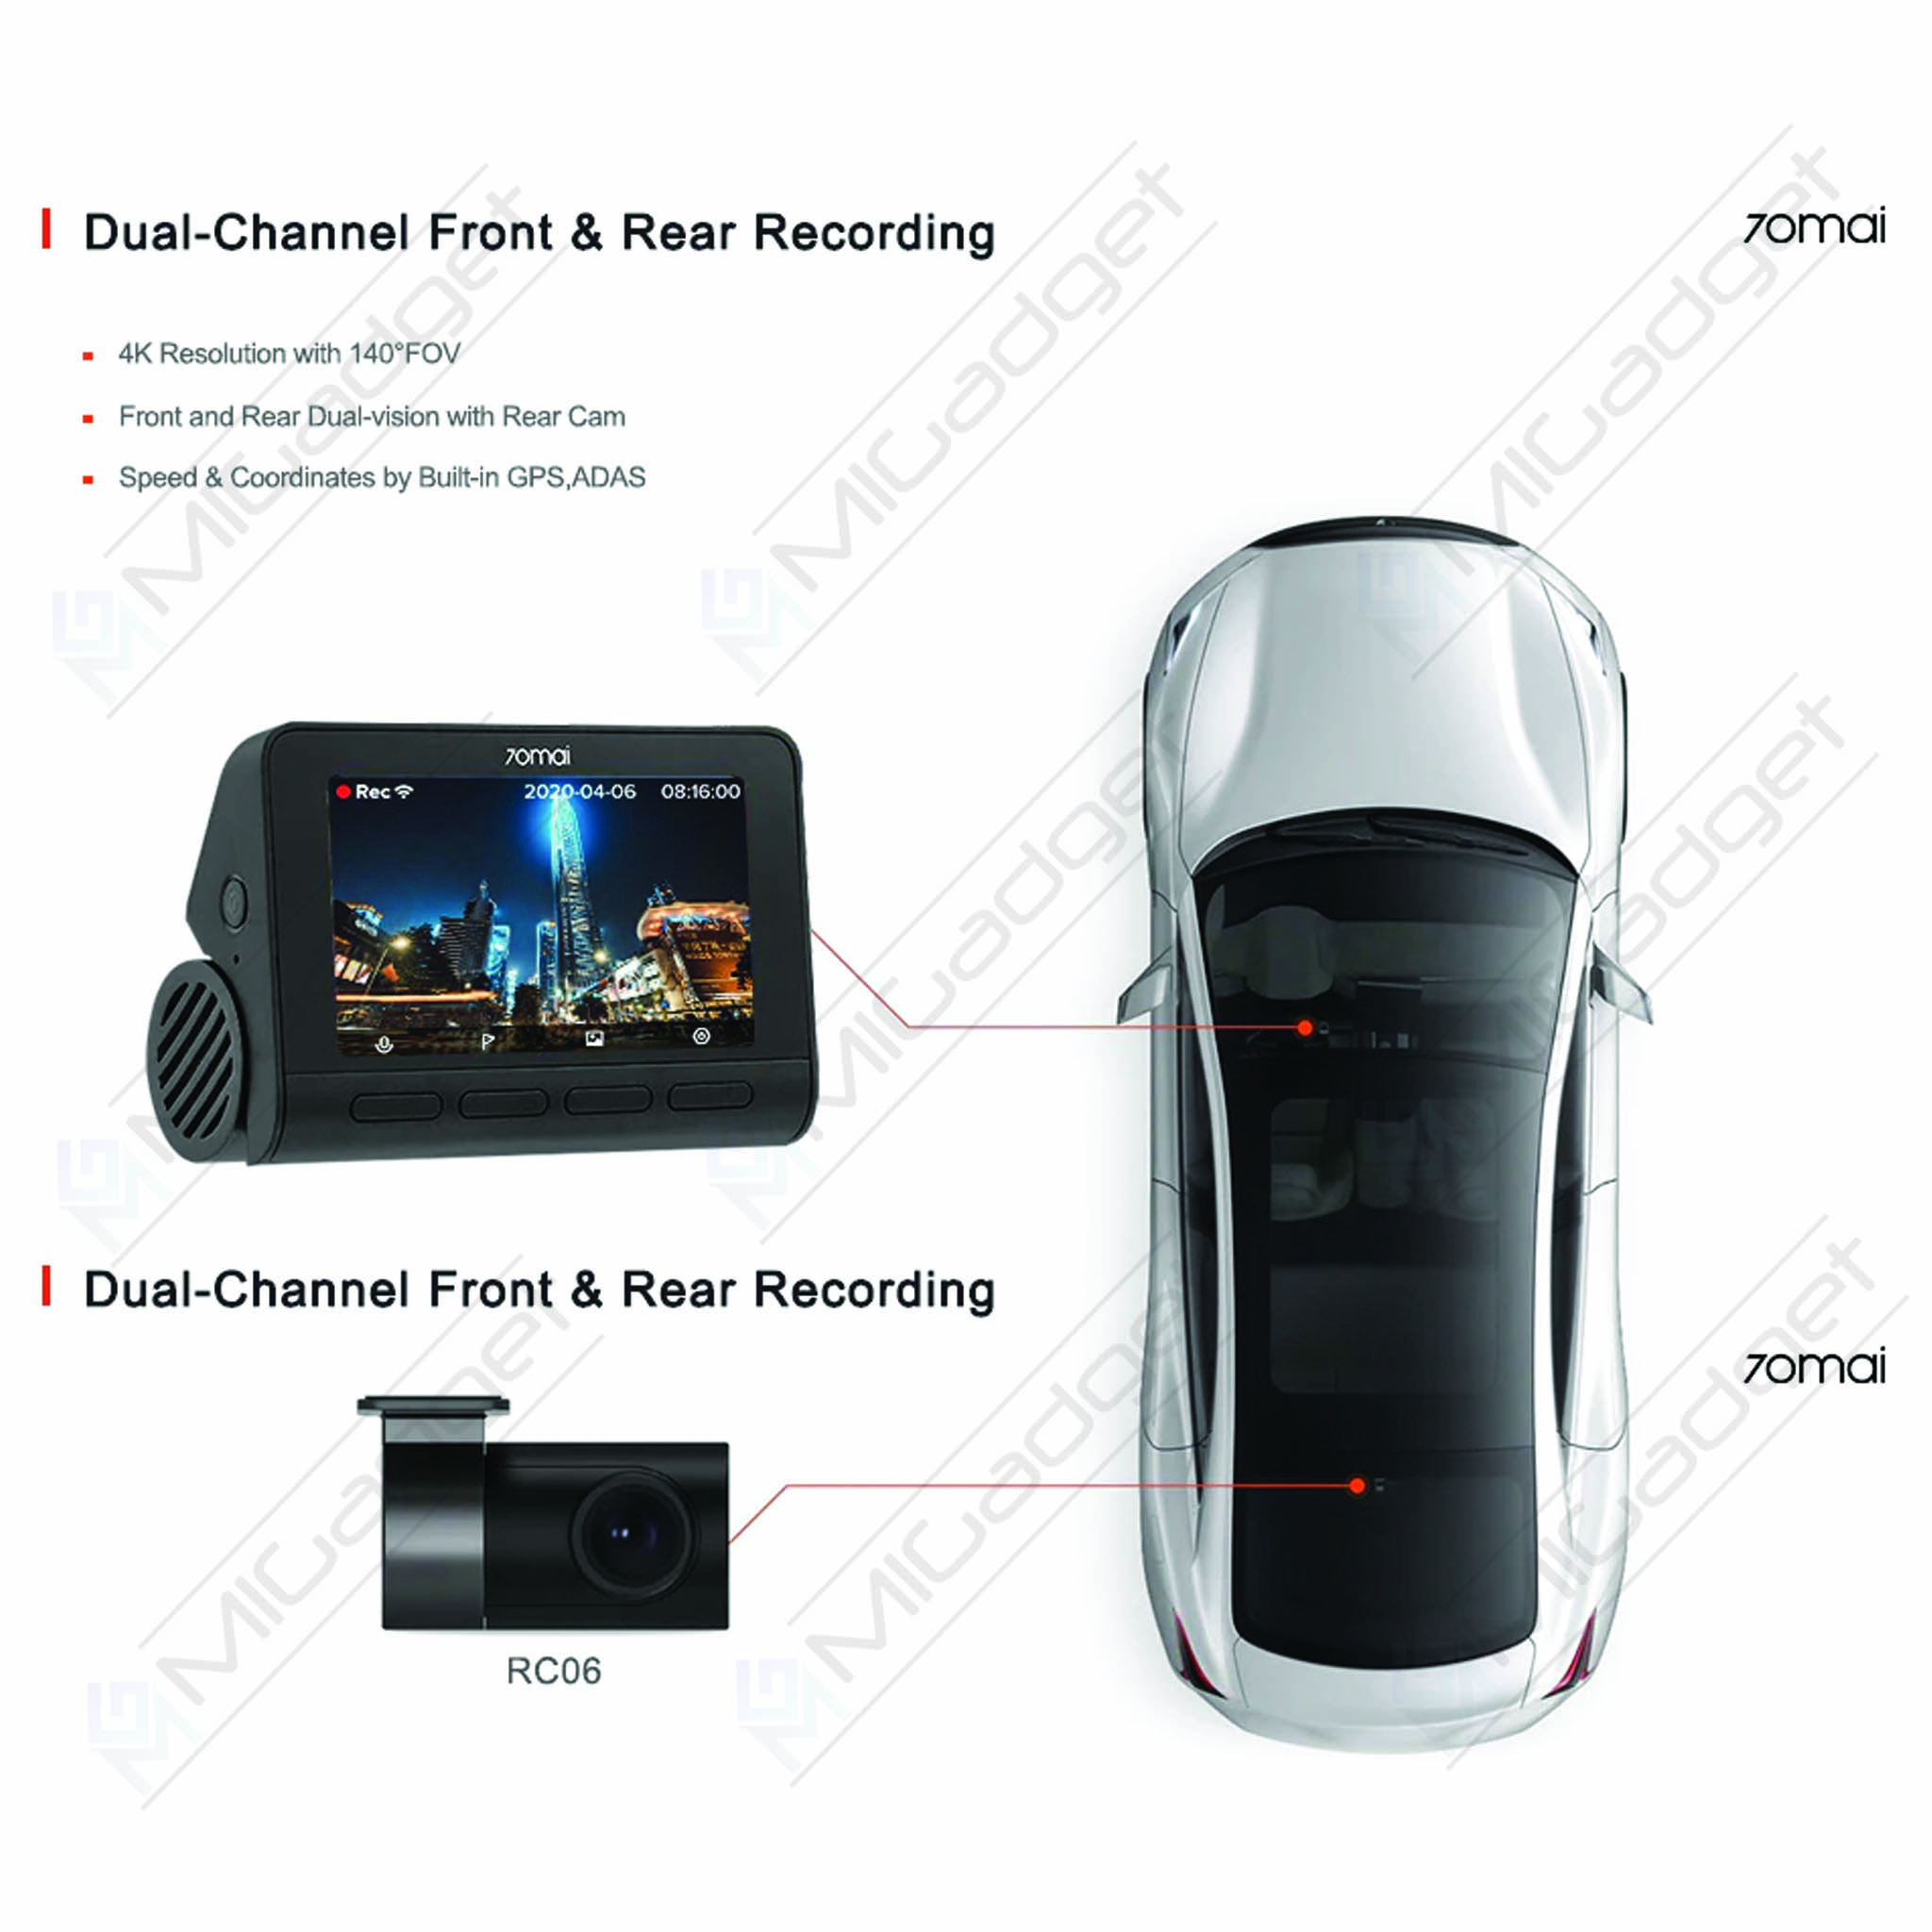 Recorder Full HD 1080P 2K Dash Cam Xiaomi 70mai A500s Built-in GPS with  Adas Dash DVR Car Camera Recorder - China Camera Drive Recorder, Driving  Recorder